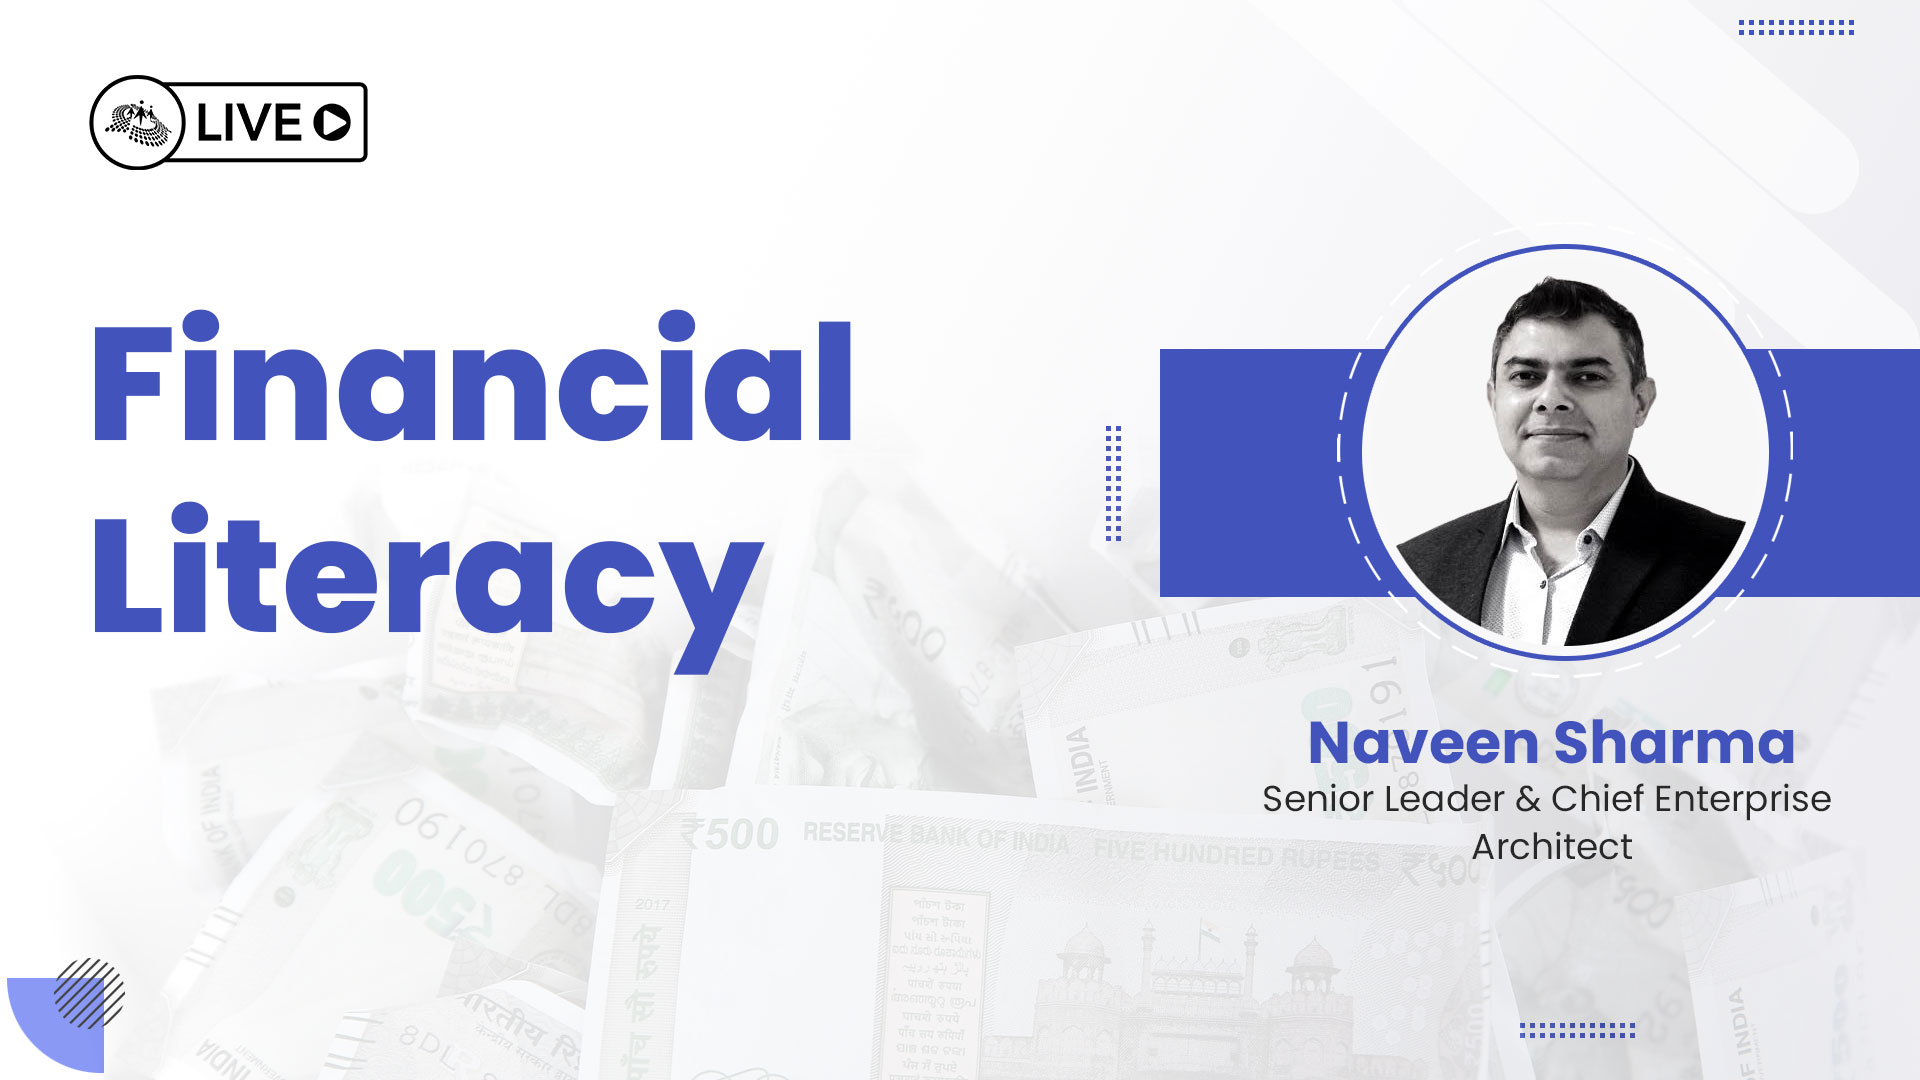 Financial Literacy by Naveen Sharma